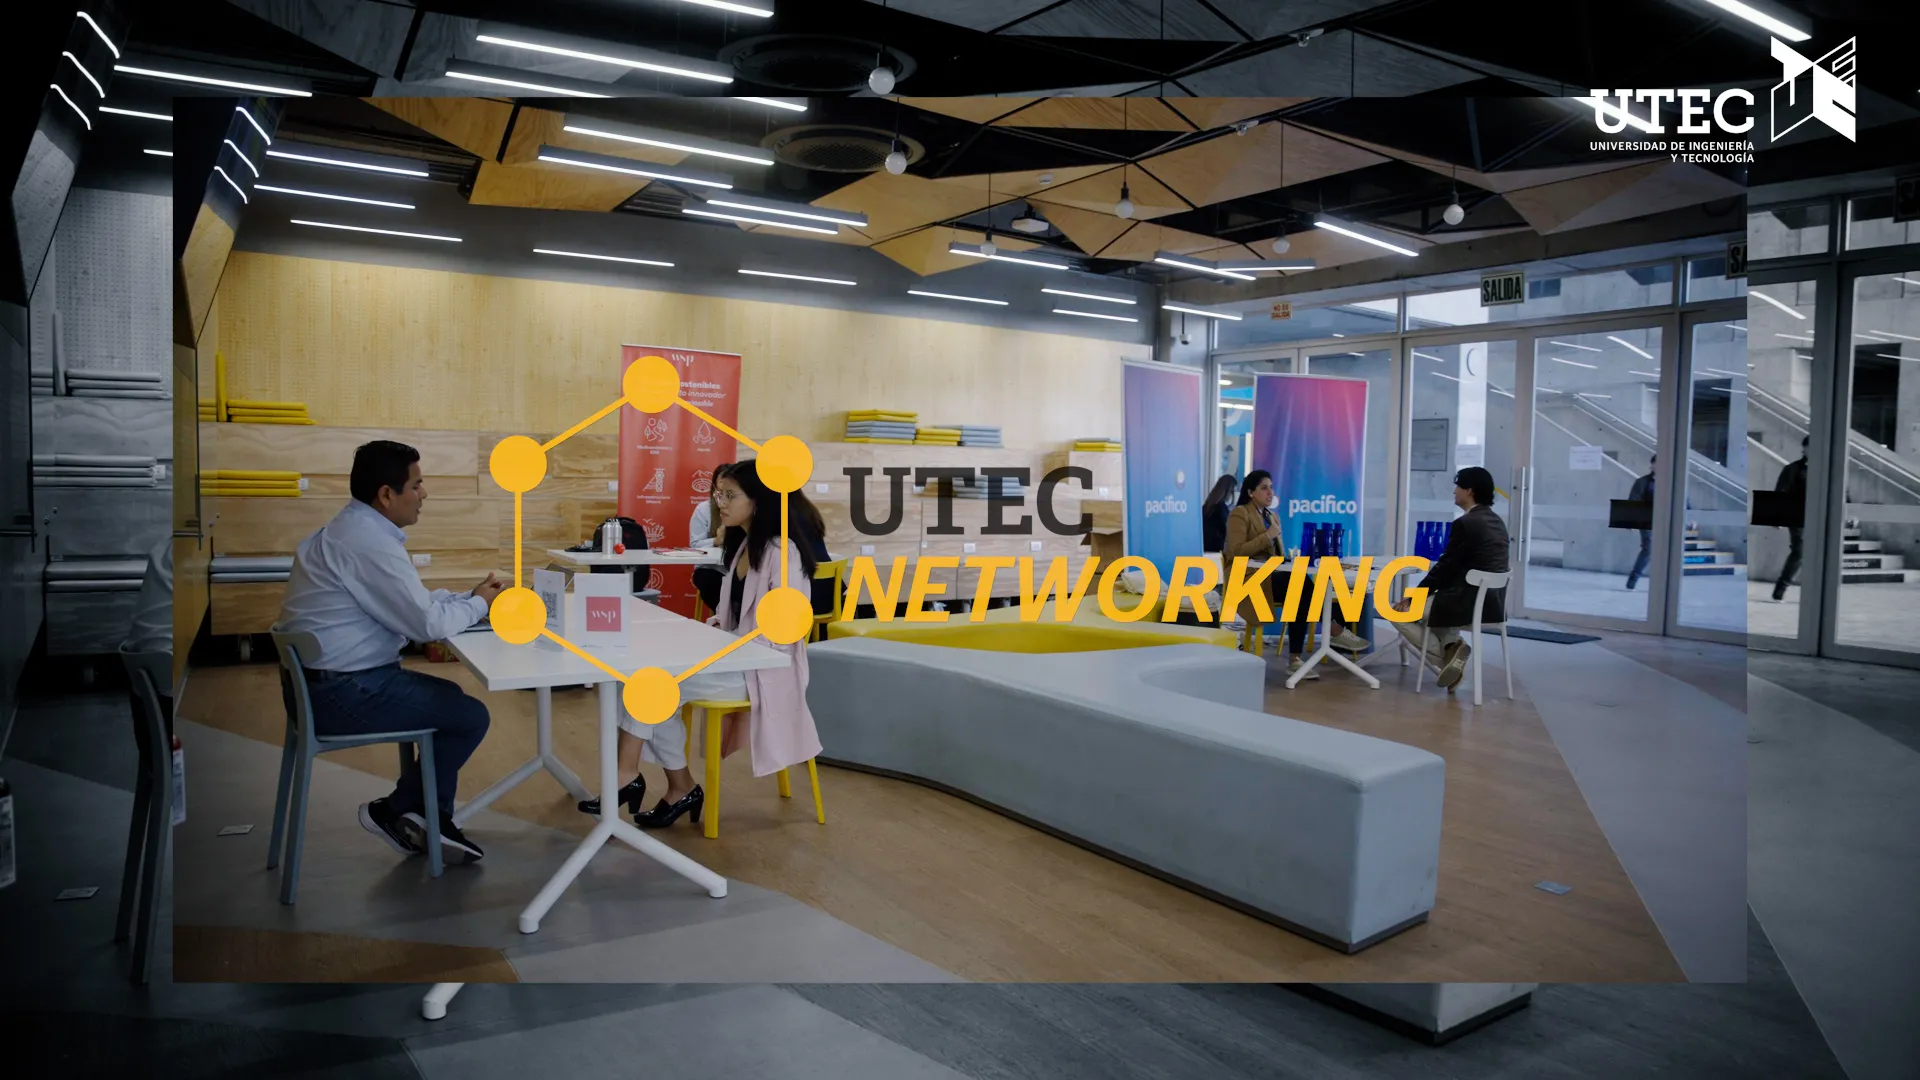 UTEC - Networking